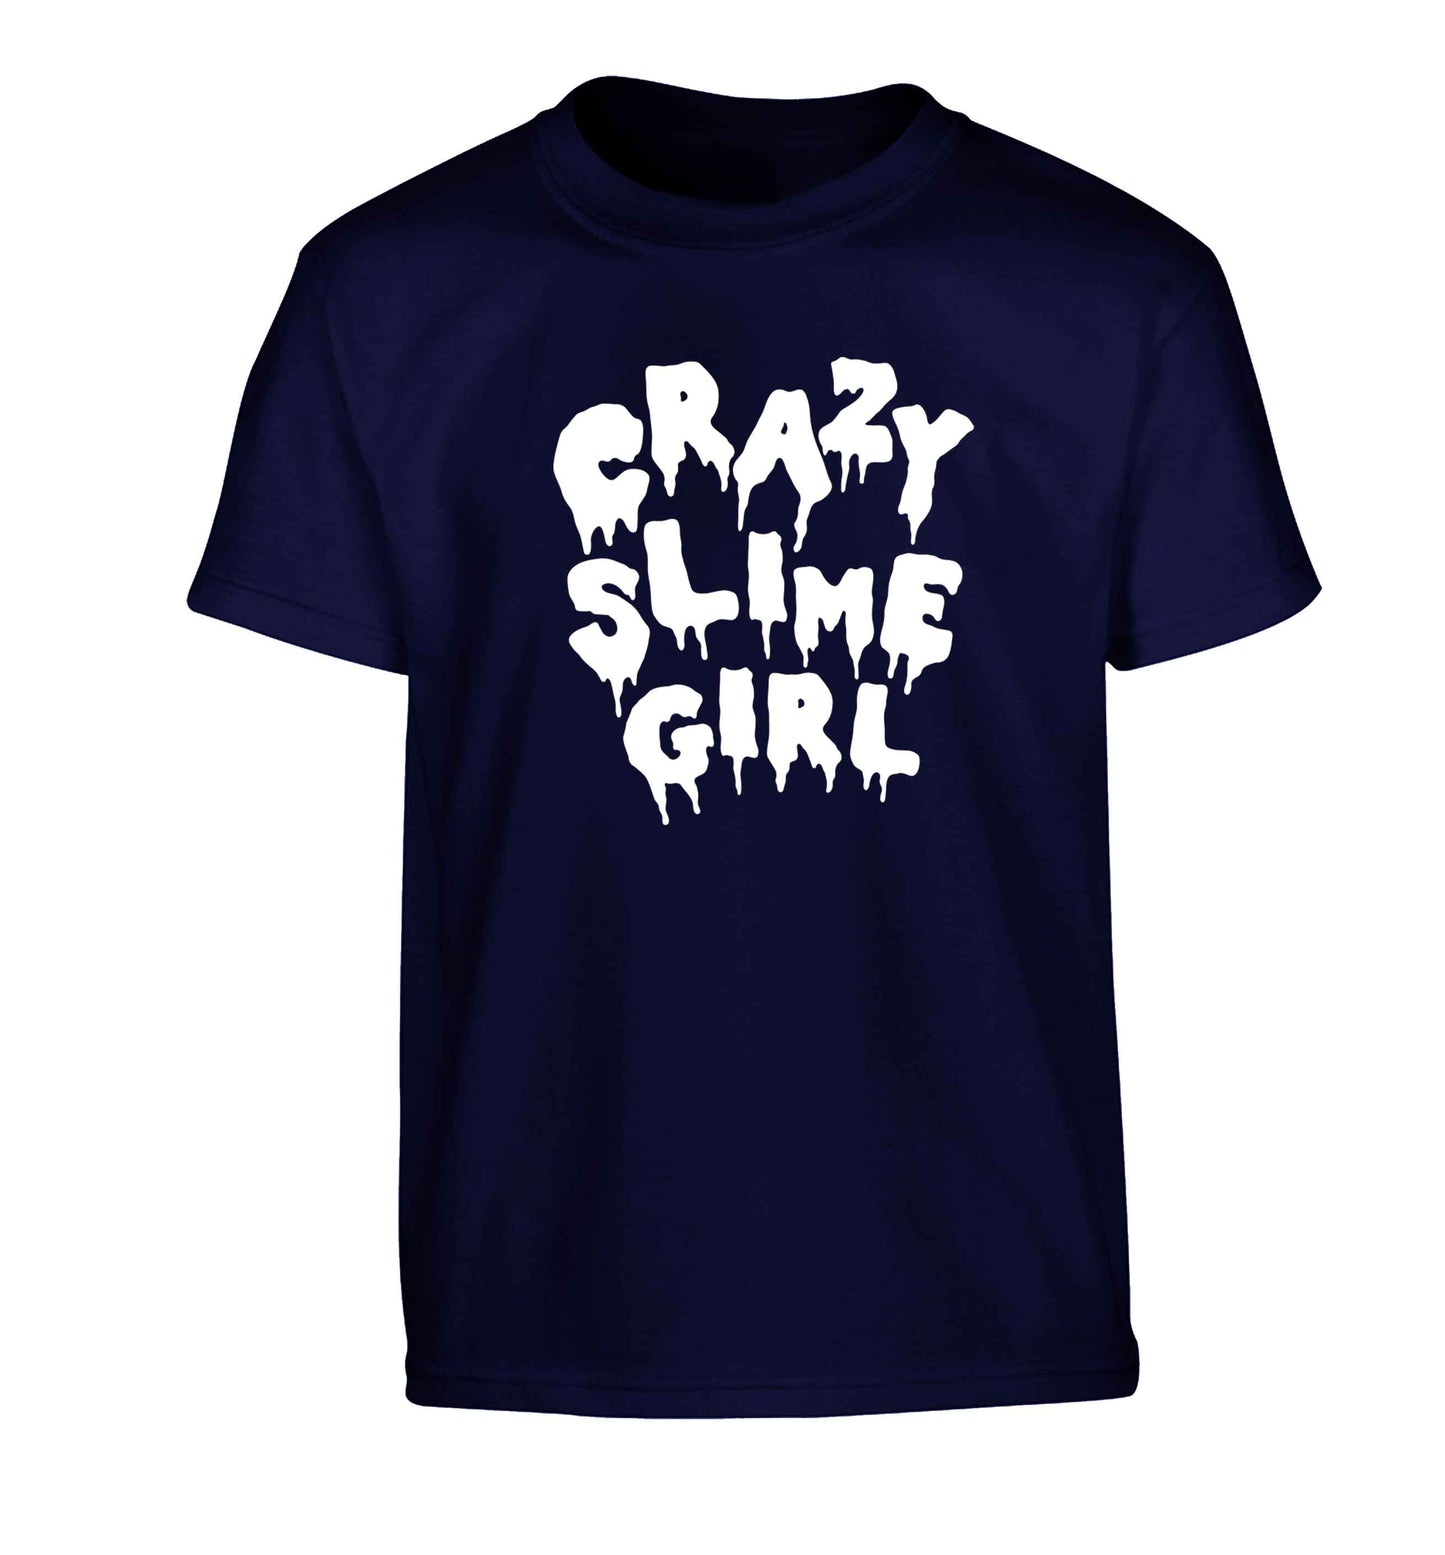 Crazy slime girl Children's navy Tshirt 12-13 Years